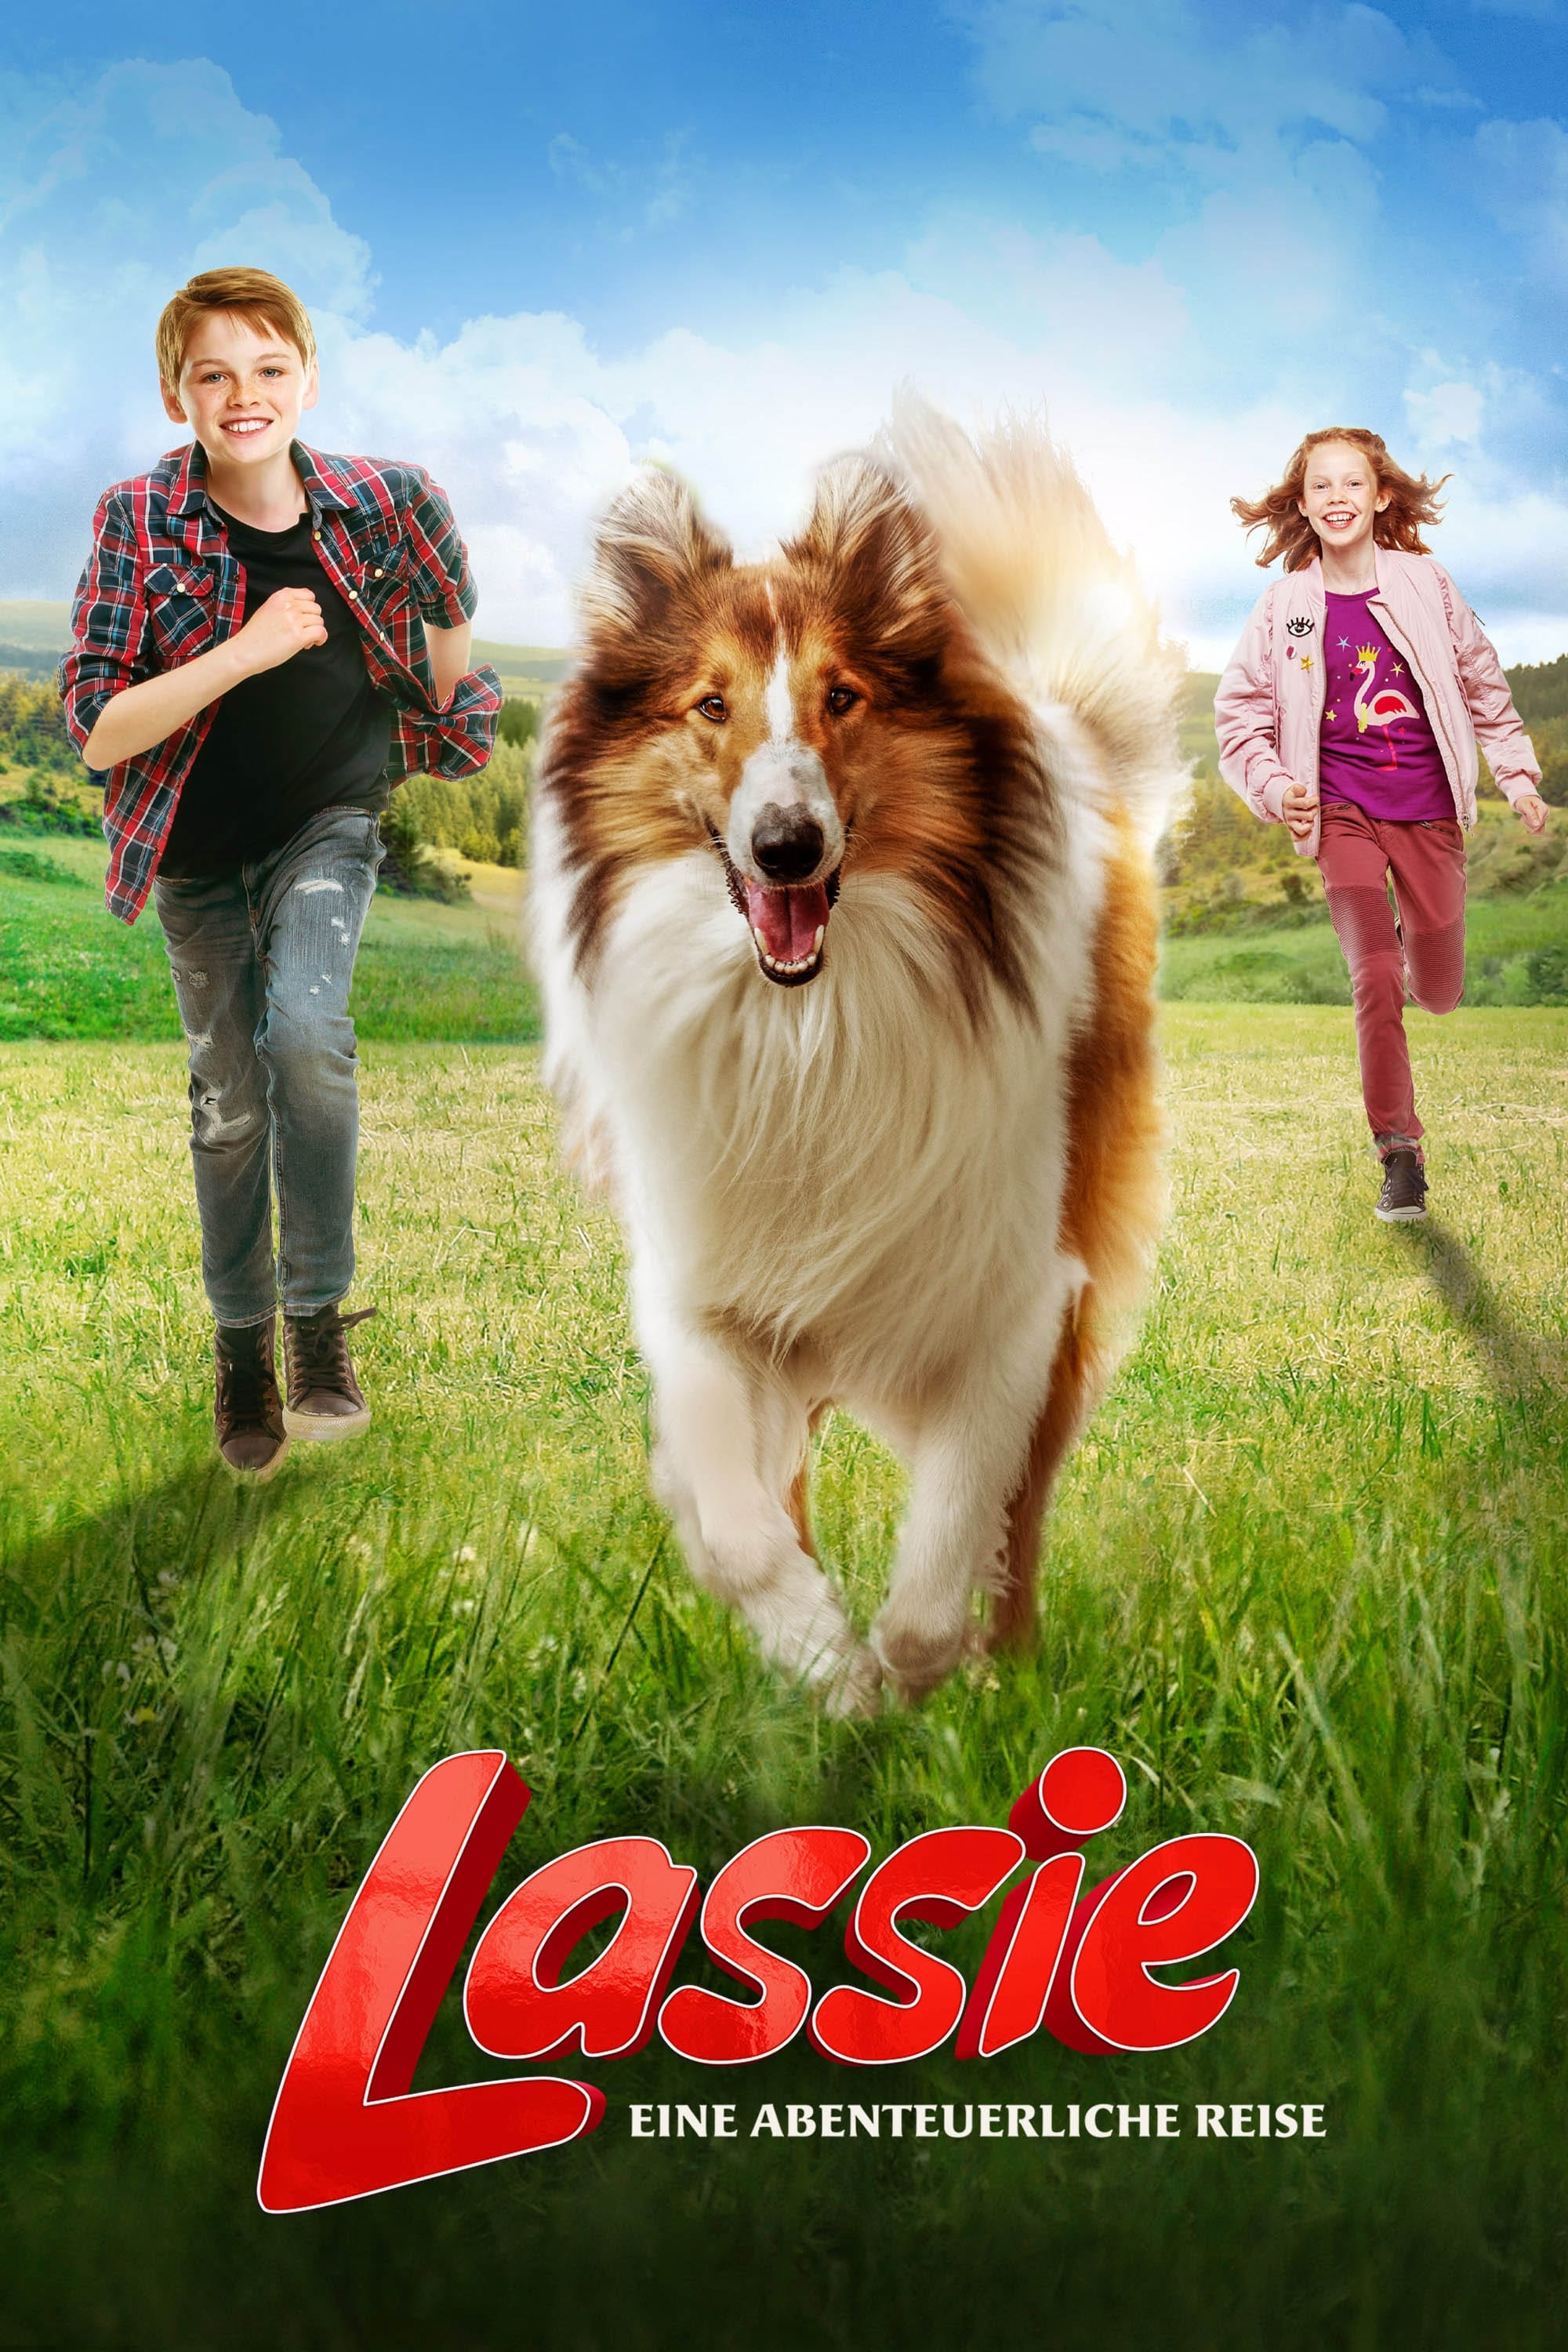 Lassie vuelve a casa (2020) PLACEBO Full HD 1080p Latino